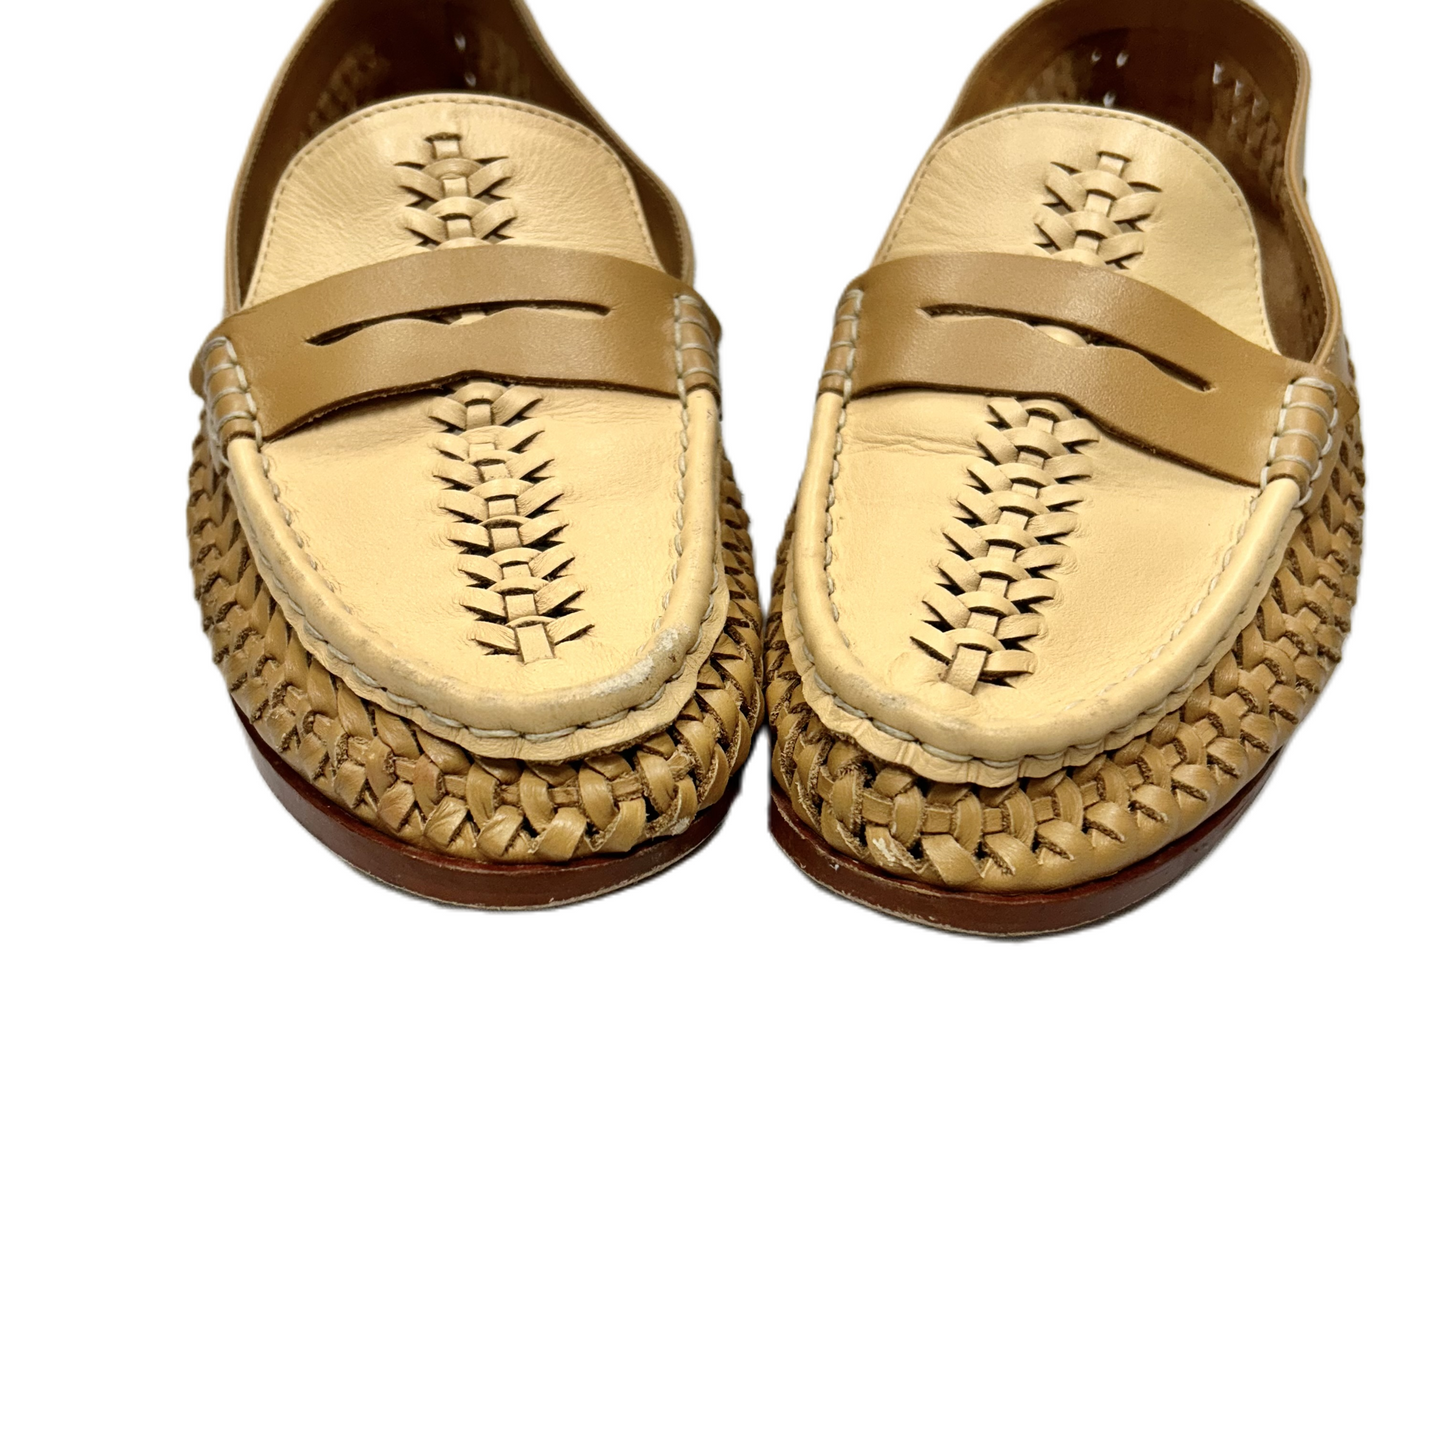 Tan Shoes Flats By Pilcro, Size: 9